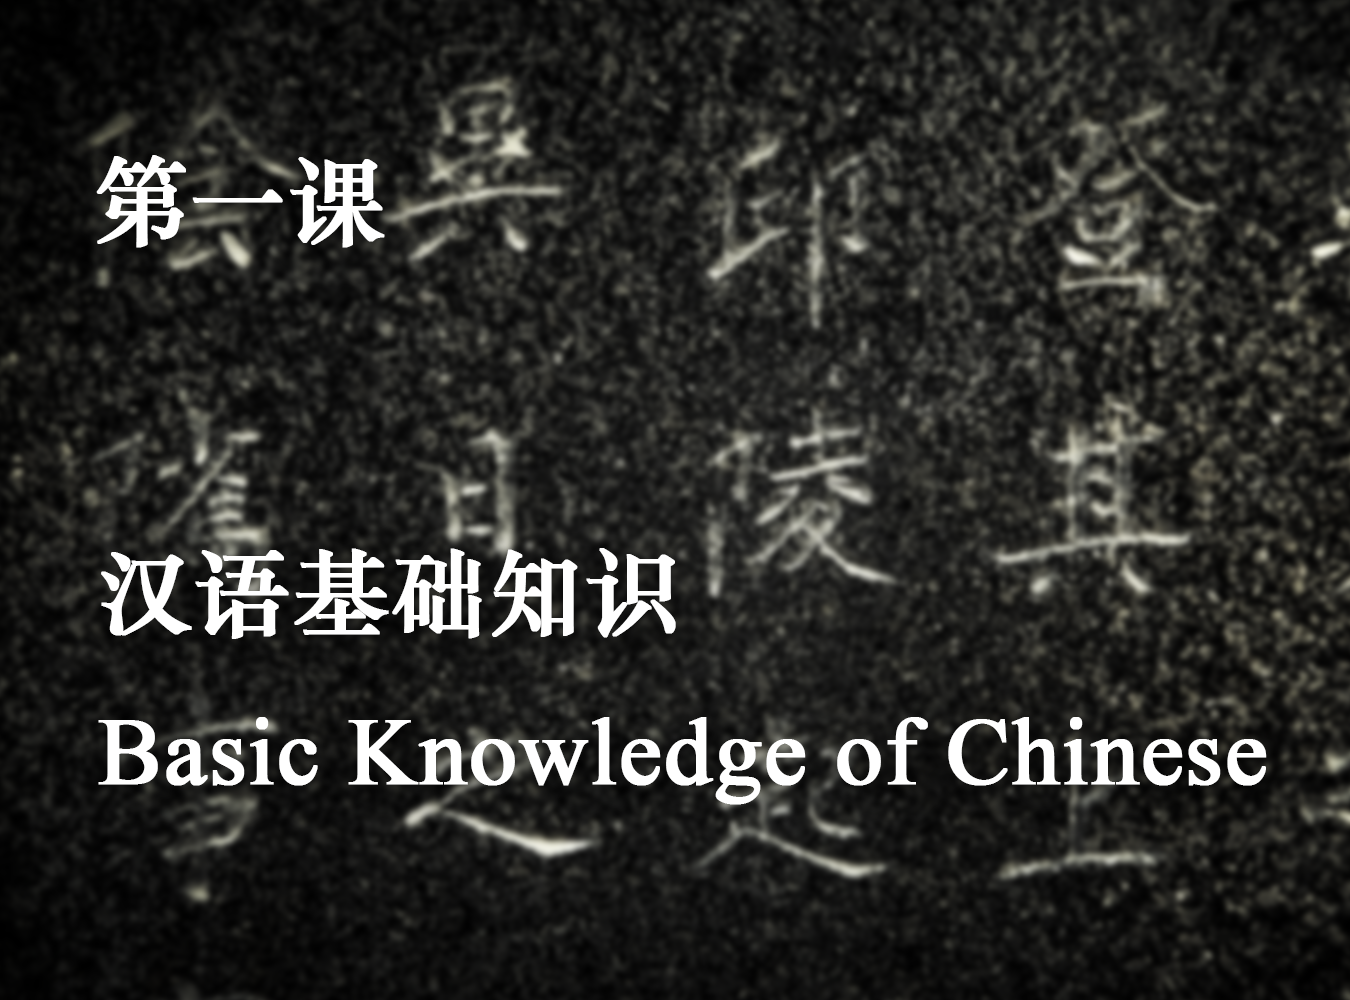 Basic Knowledge of Chinese